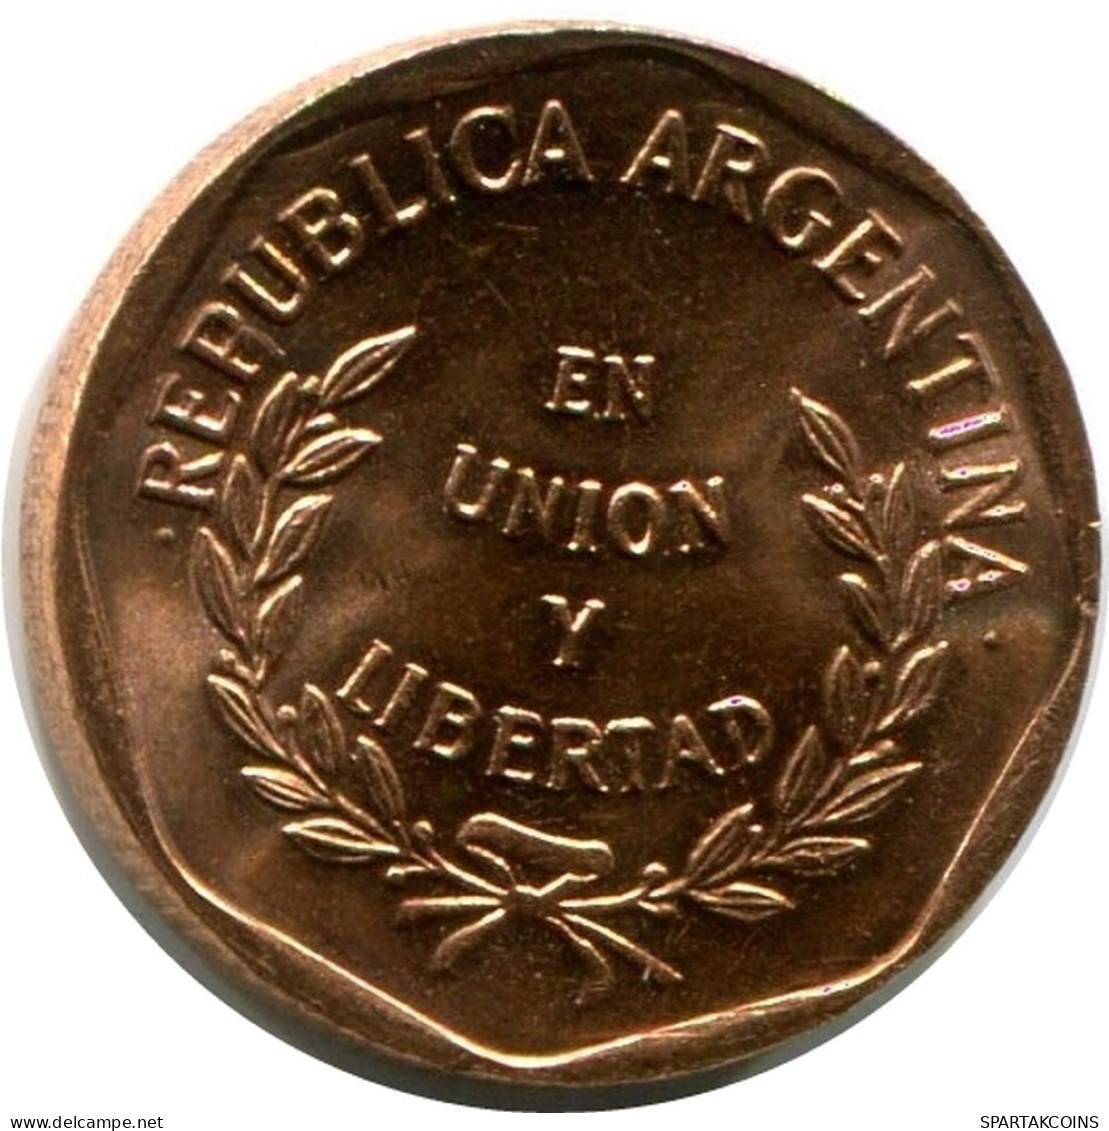 1 CENTAVO 1998 ARGENTINA Moneda UNC #M10145.E.A - Argentina